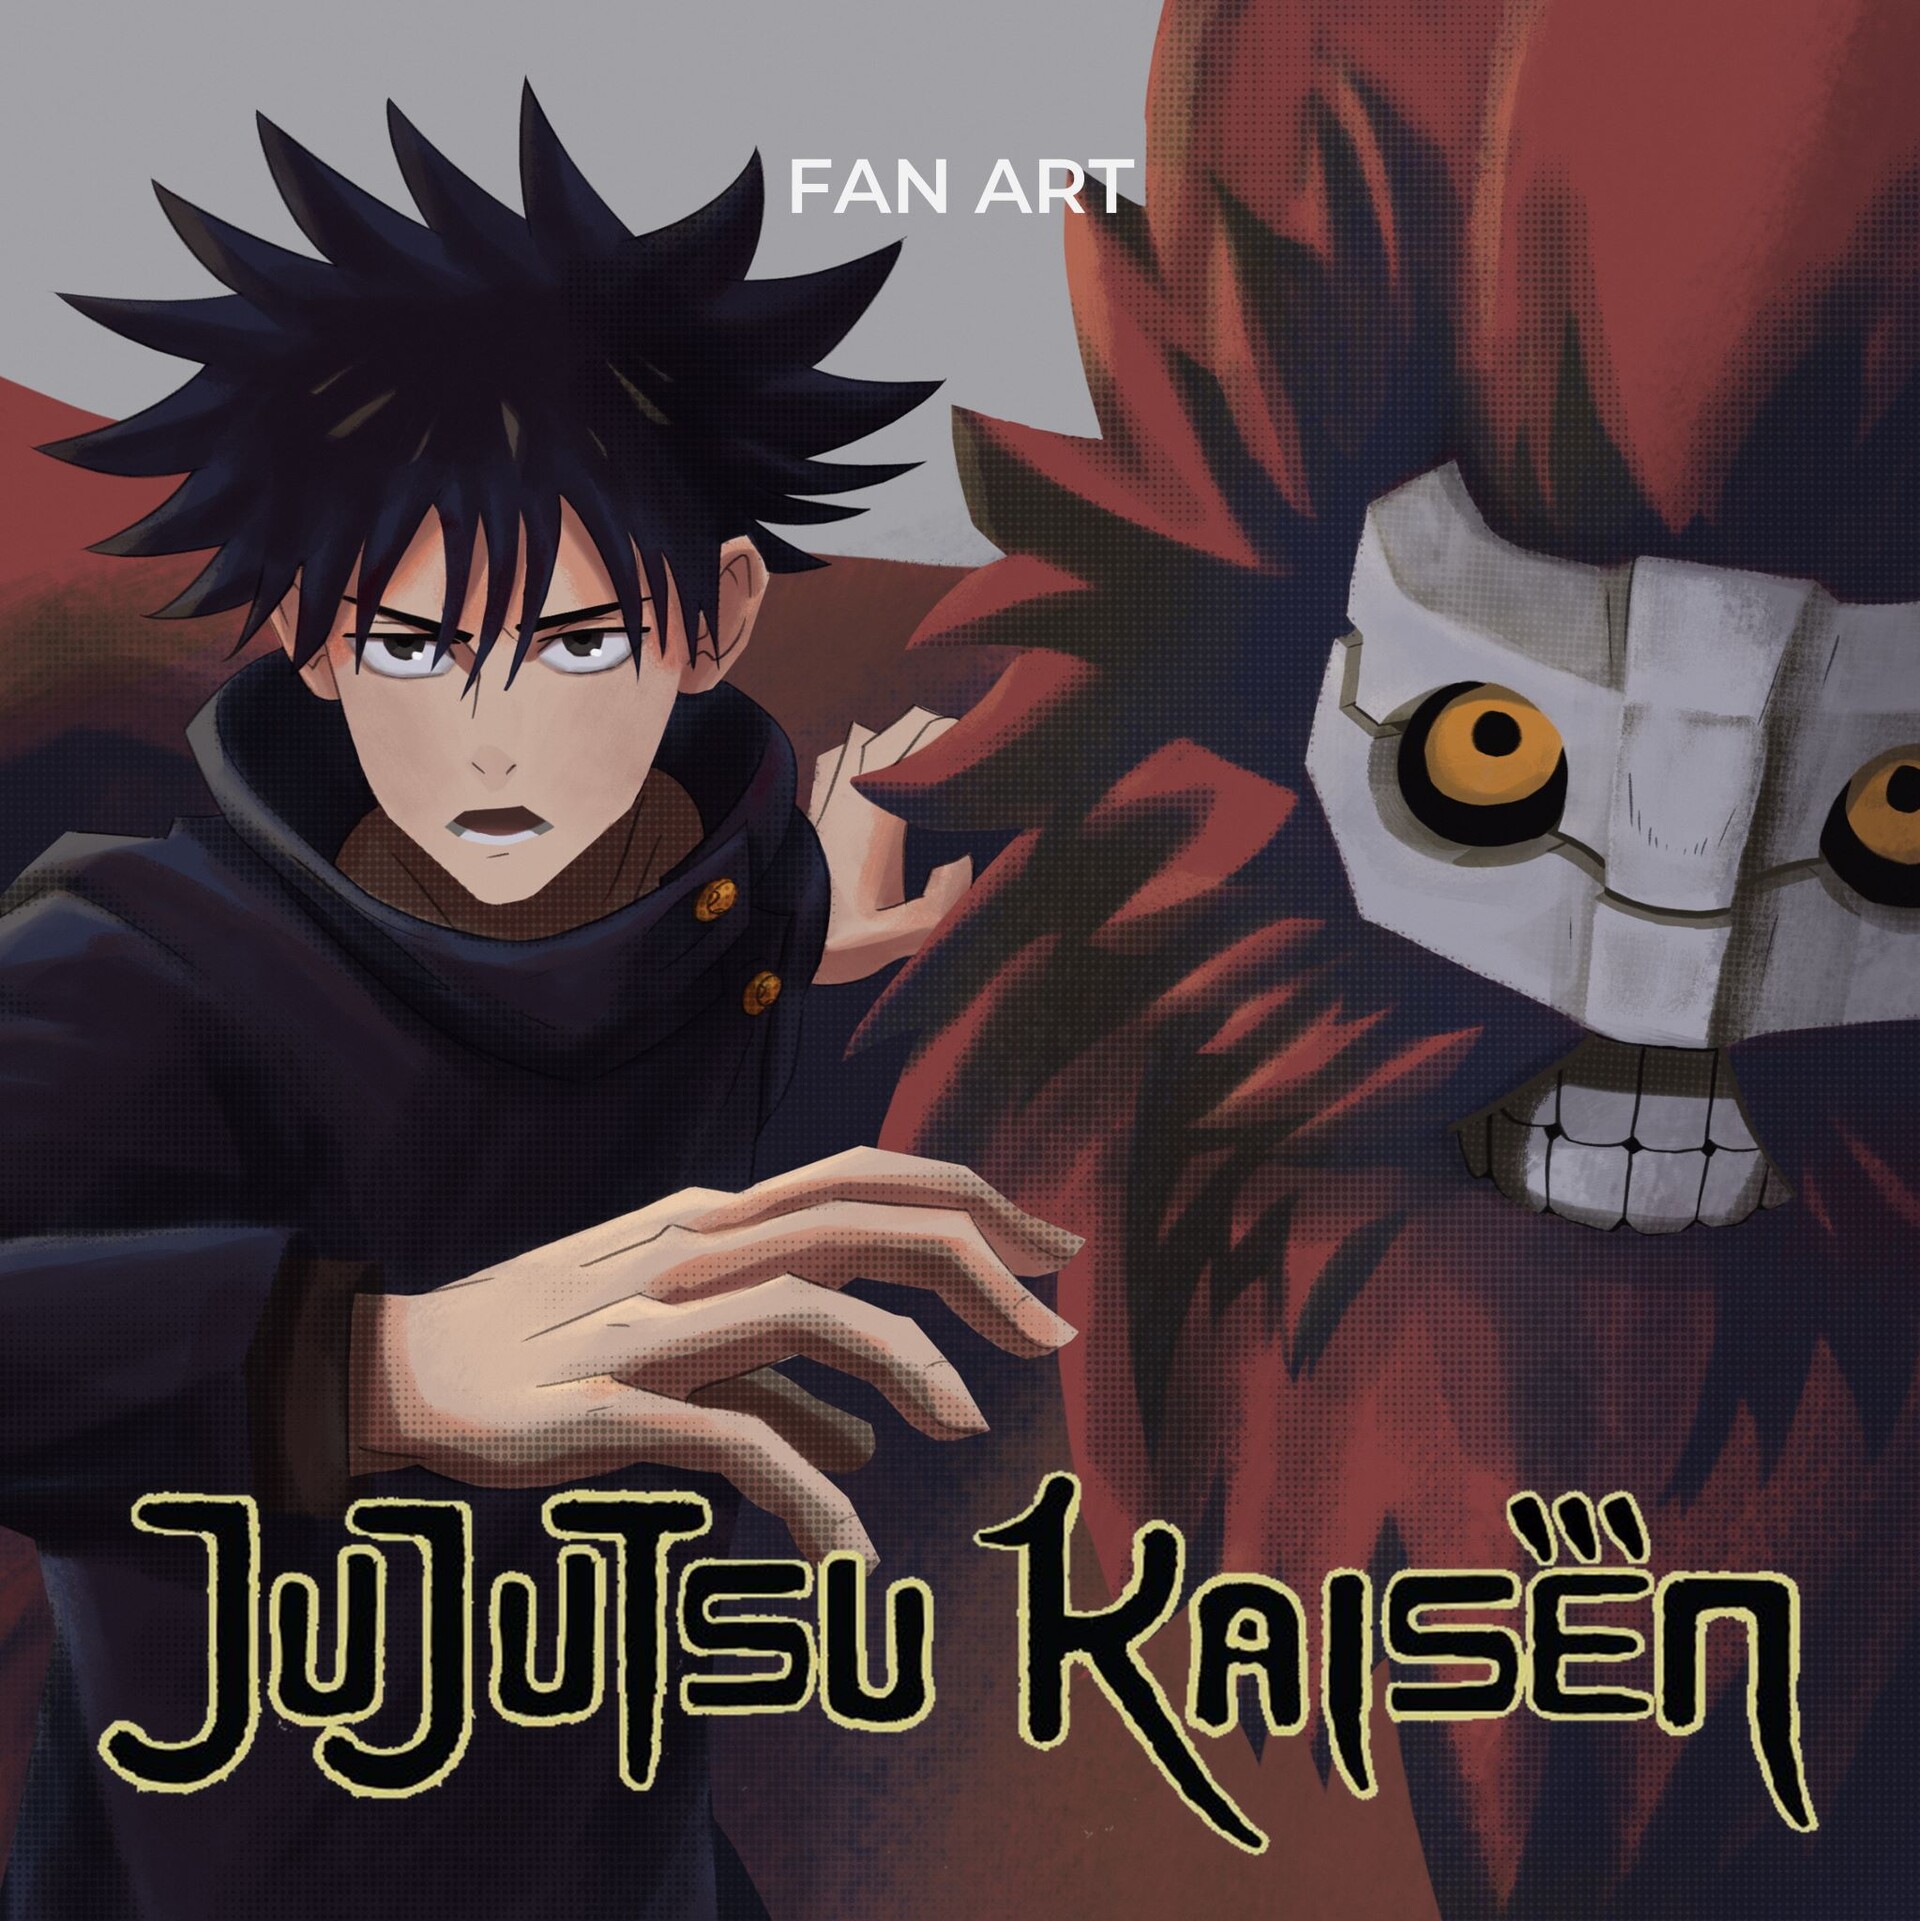 ArtStation - Jujutsu Kaisen - Manga Poster fan art